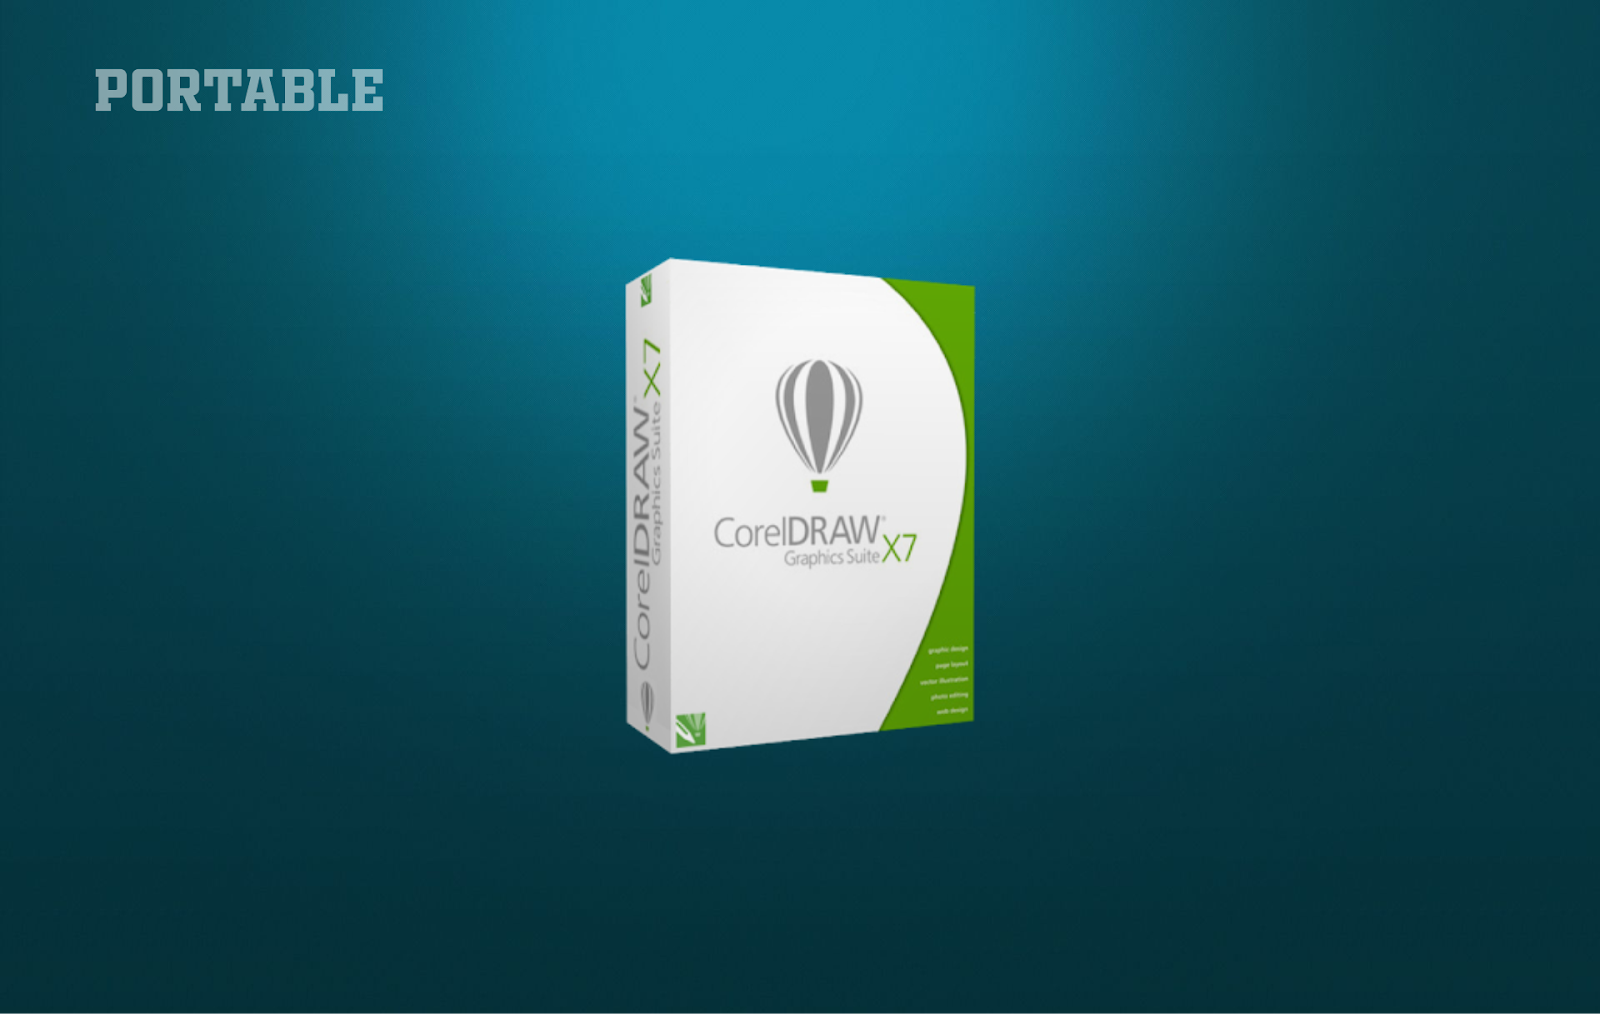 Corel 10. Coreldraw x7. Coreldraw Portable. Coreldraw 7. Coreldraw 7 Freeware Portable.